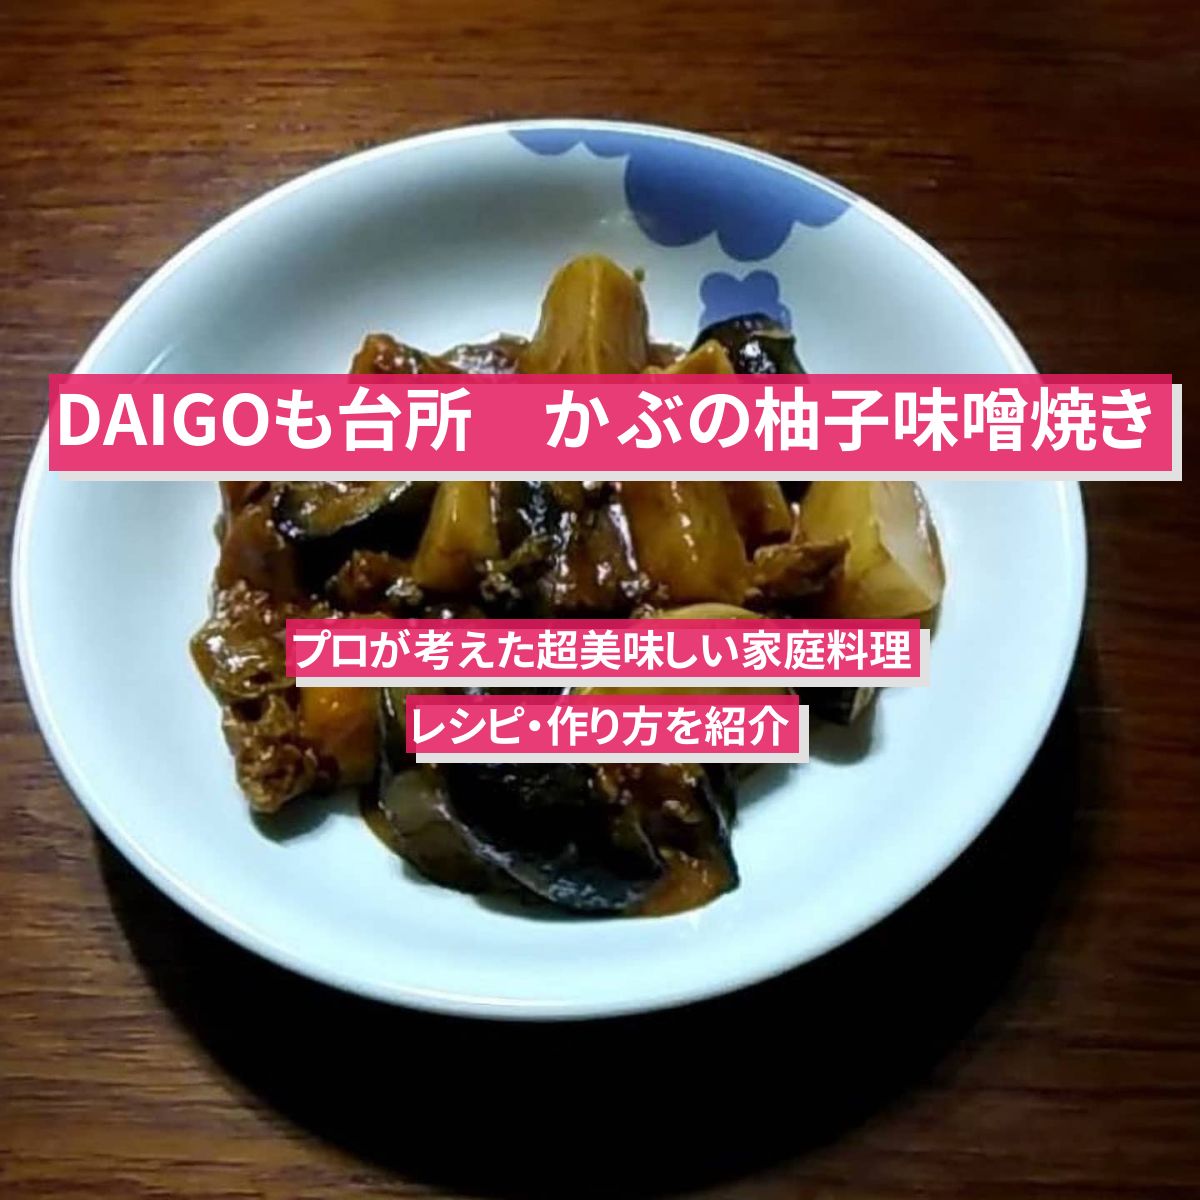 【DAIGOも台所】『かぶの柚子味噌焼き』のレシピ・作り方を紹介